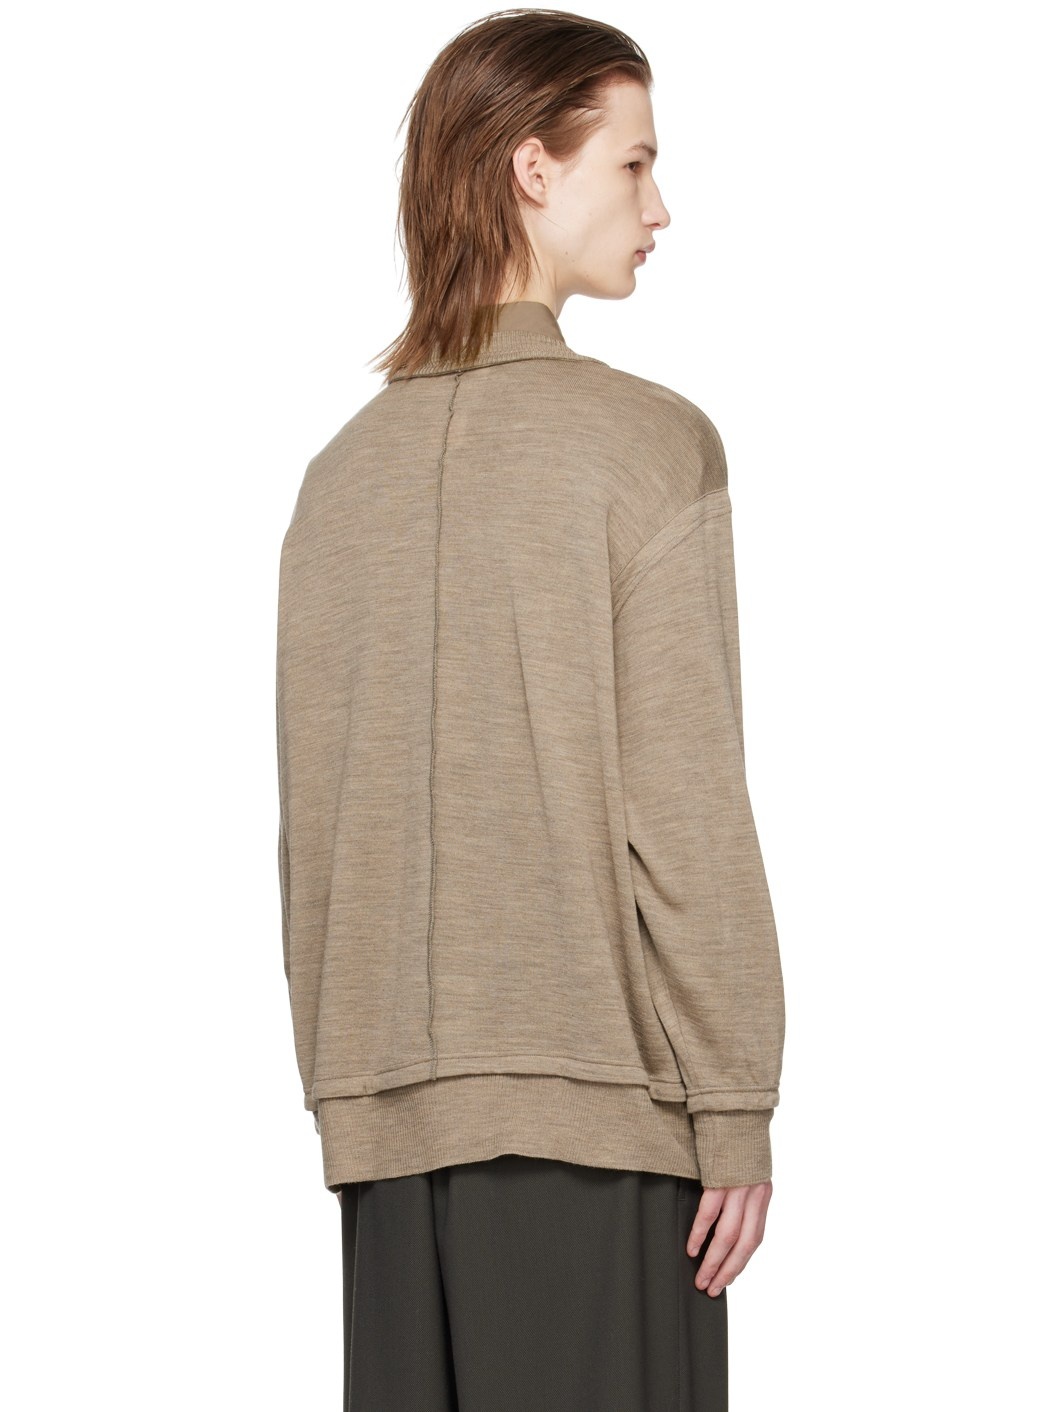 Taupe Exposed Seam Sweater - 3